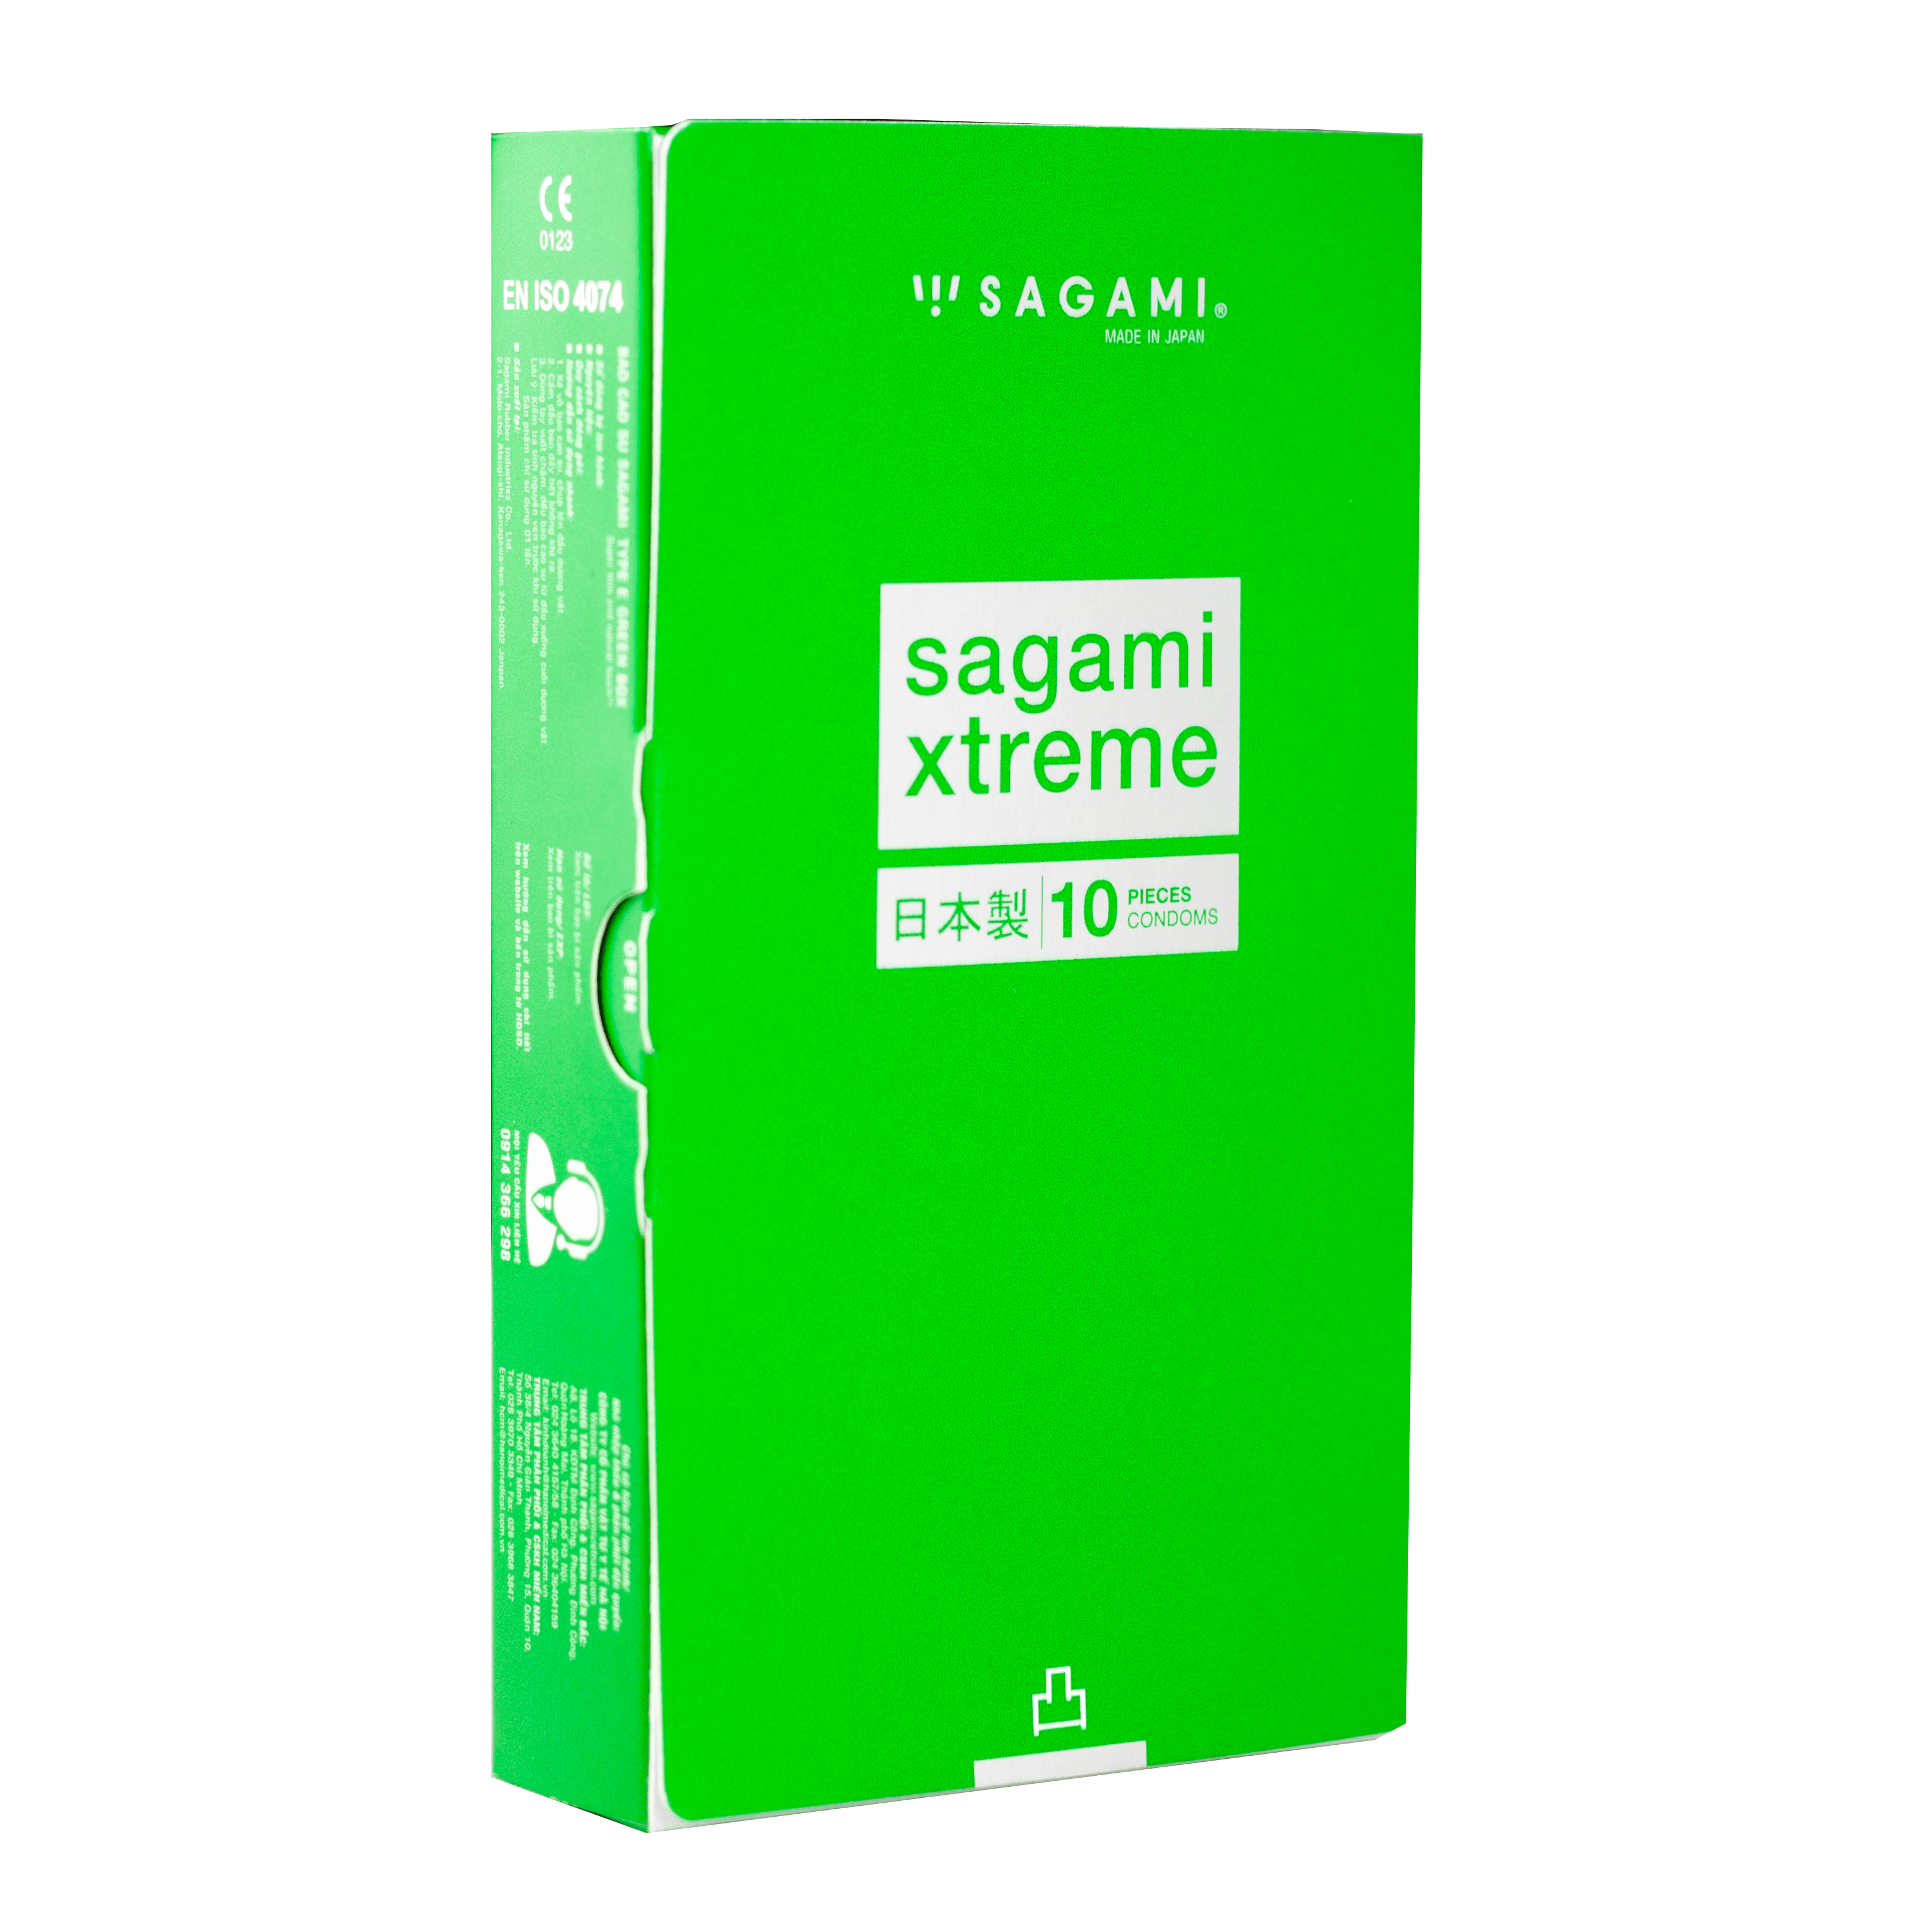 Bao cao su Sagami Xtreme Green (Hộp 10) - baocao su nam có gân gai Sagami Nhật Bản